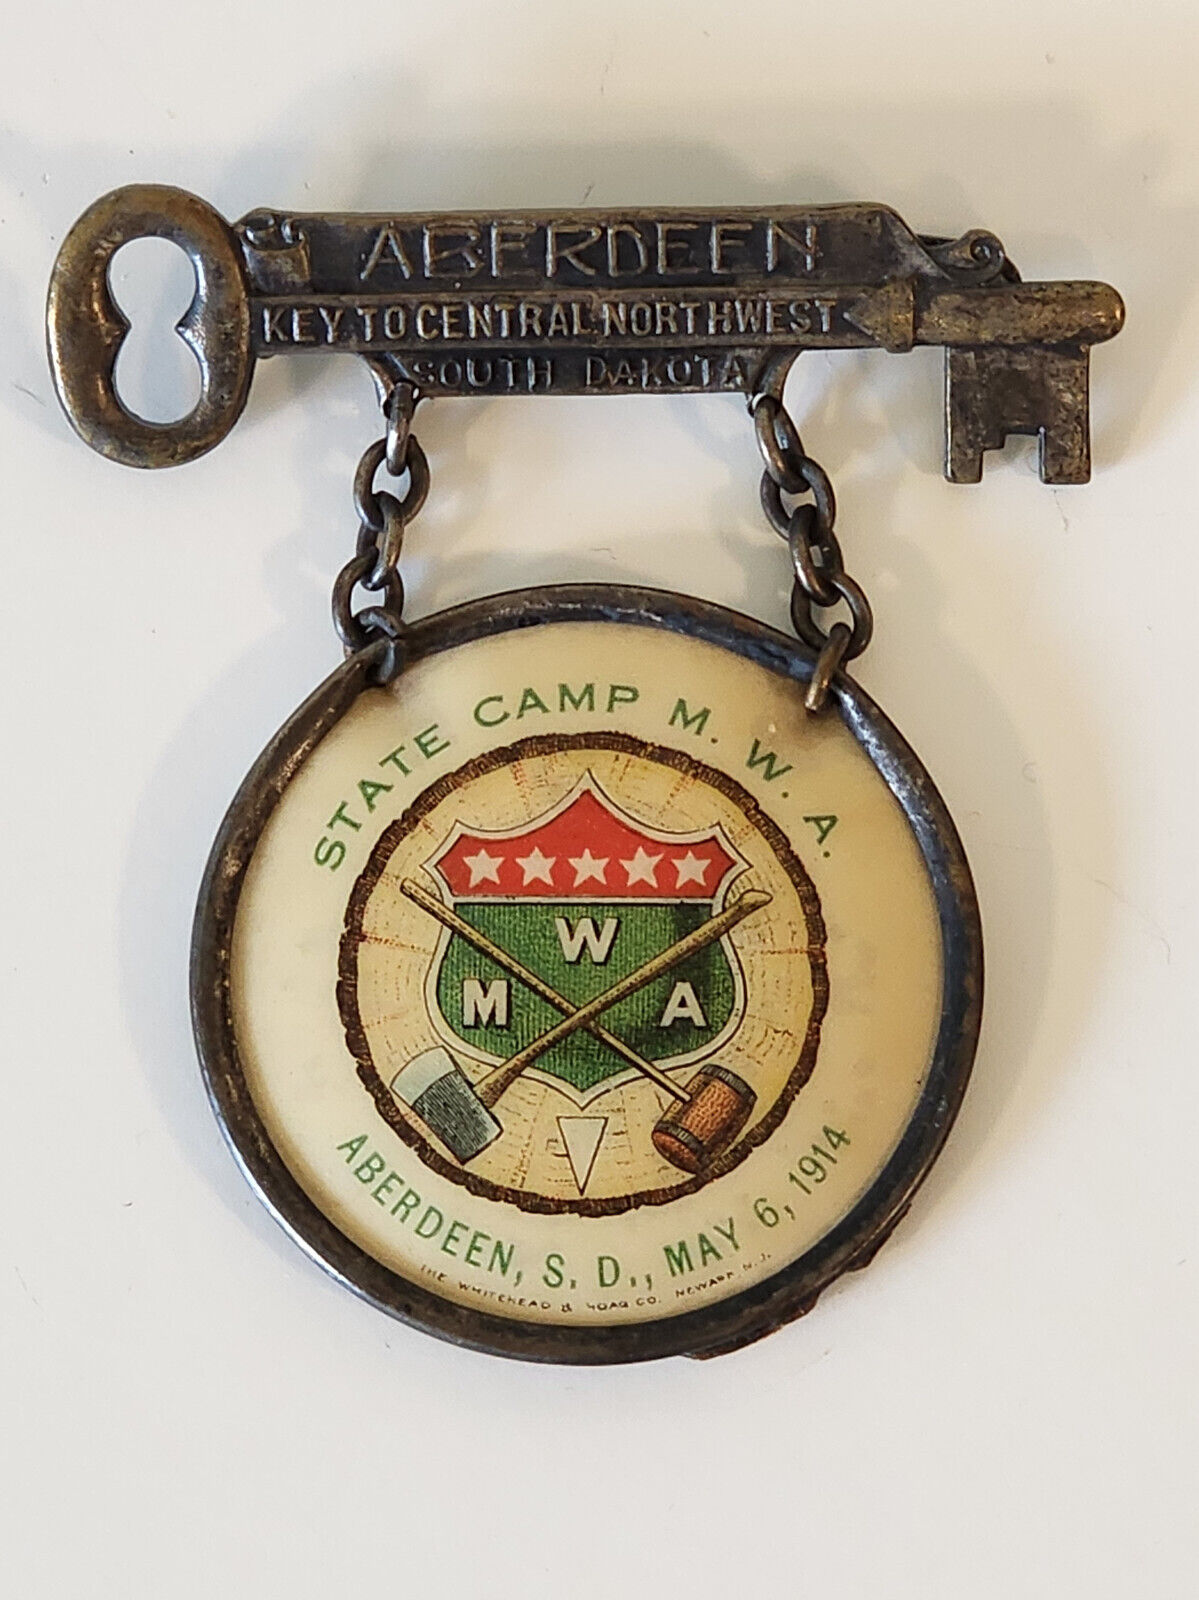 Aberdeen Sout Dakota State Camp M. W. A. May 6, 1914 pin Modern Woodmen